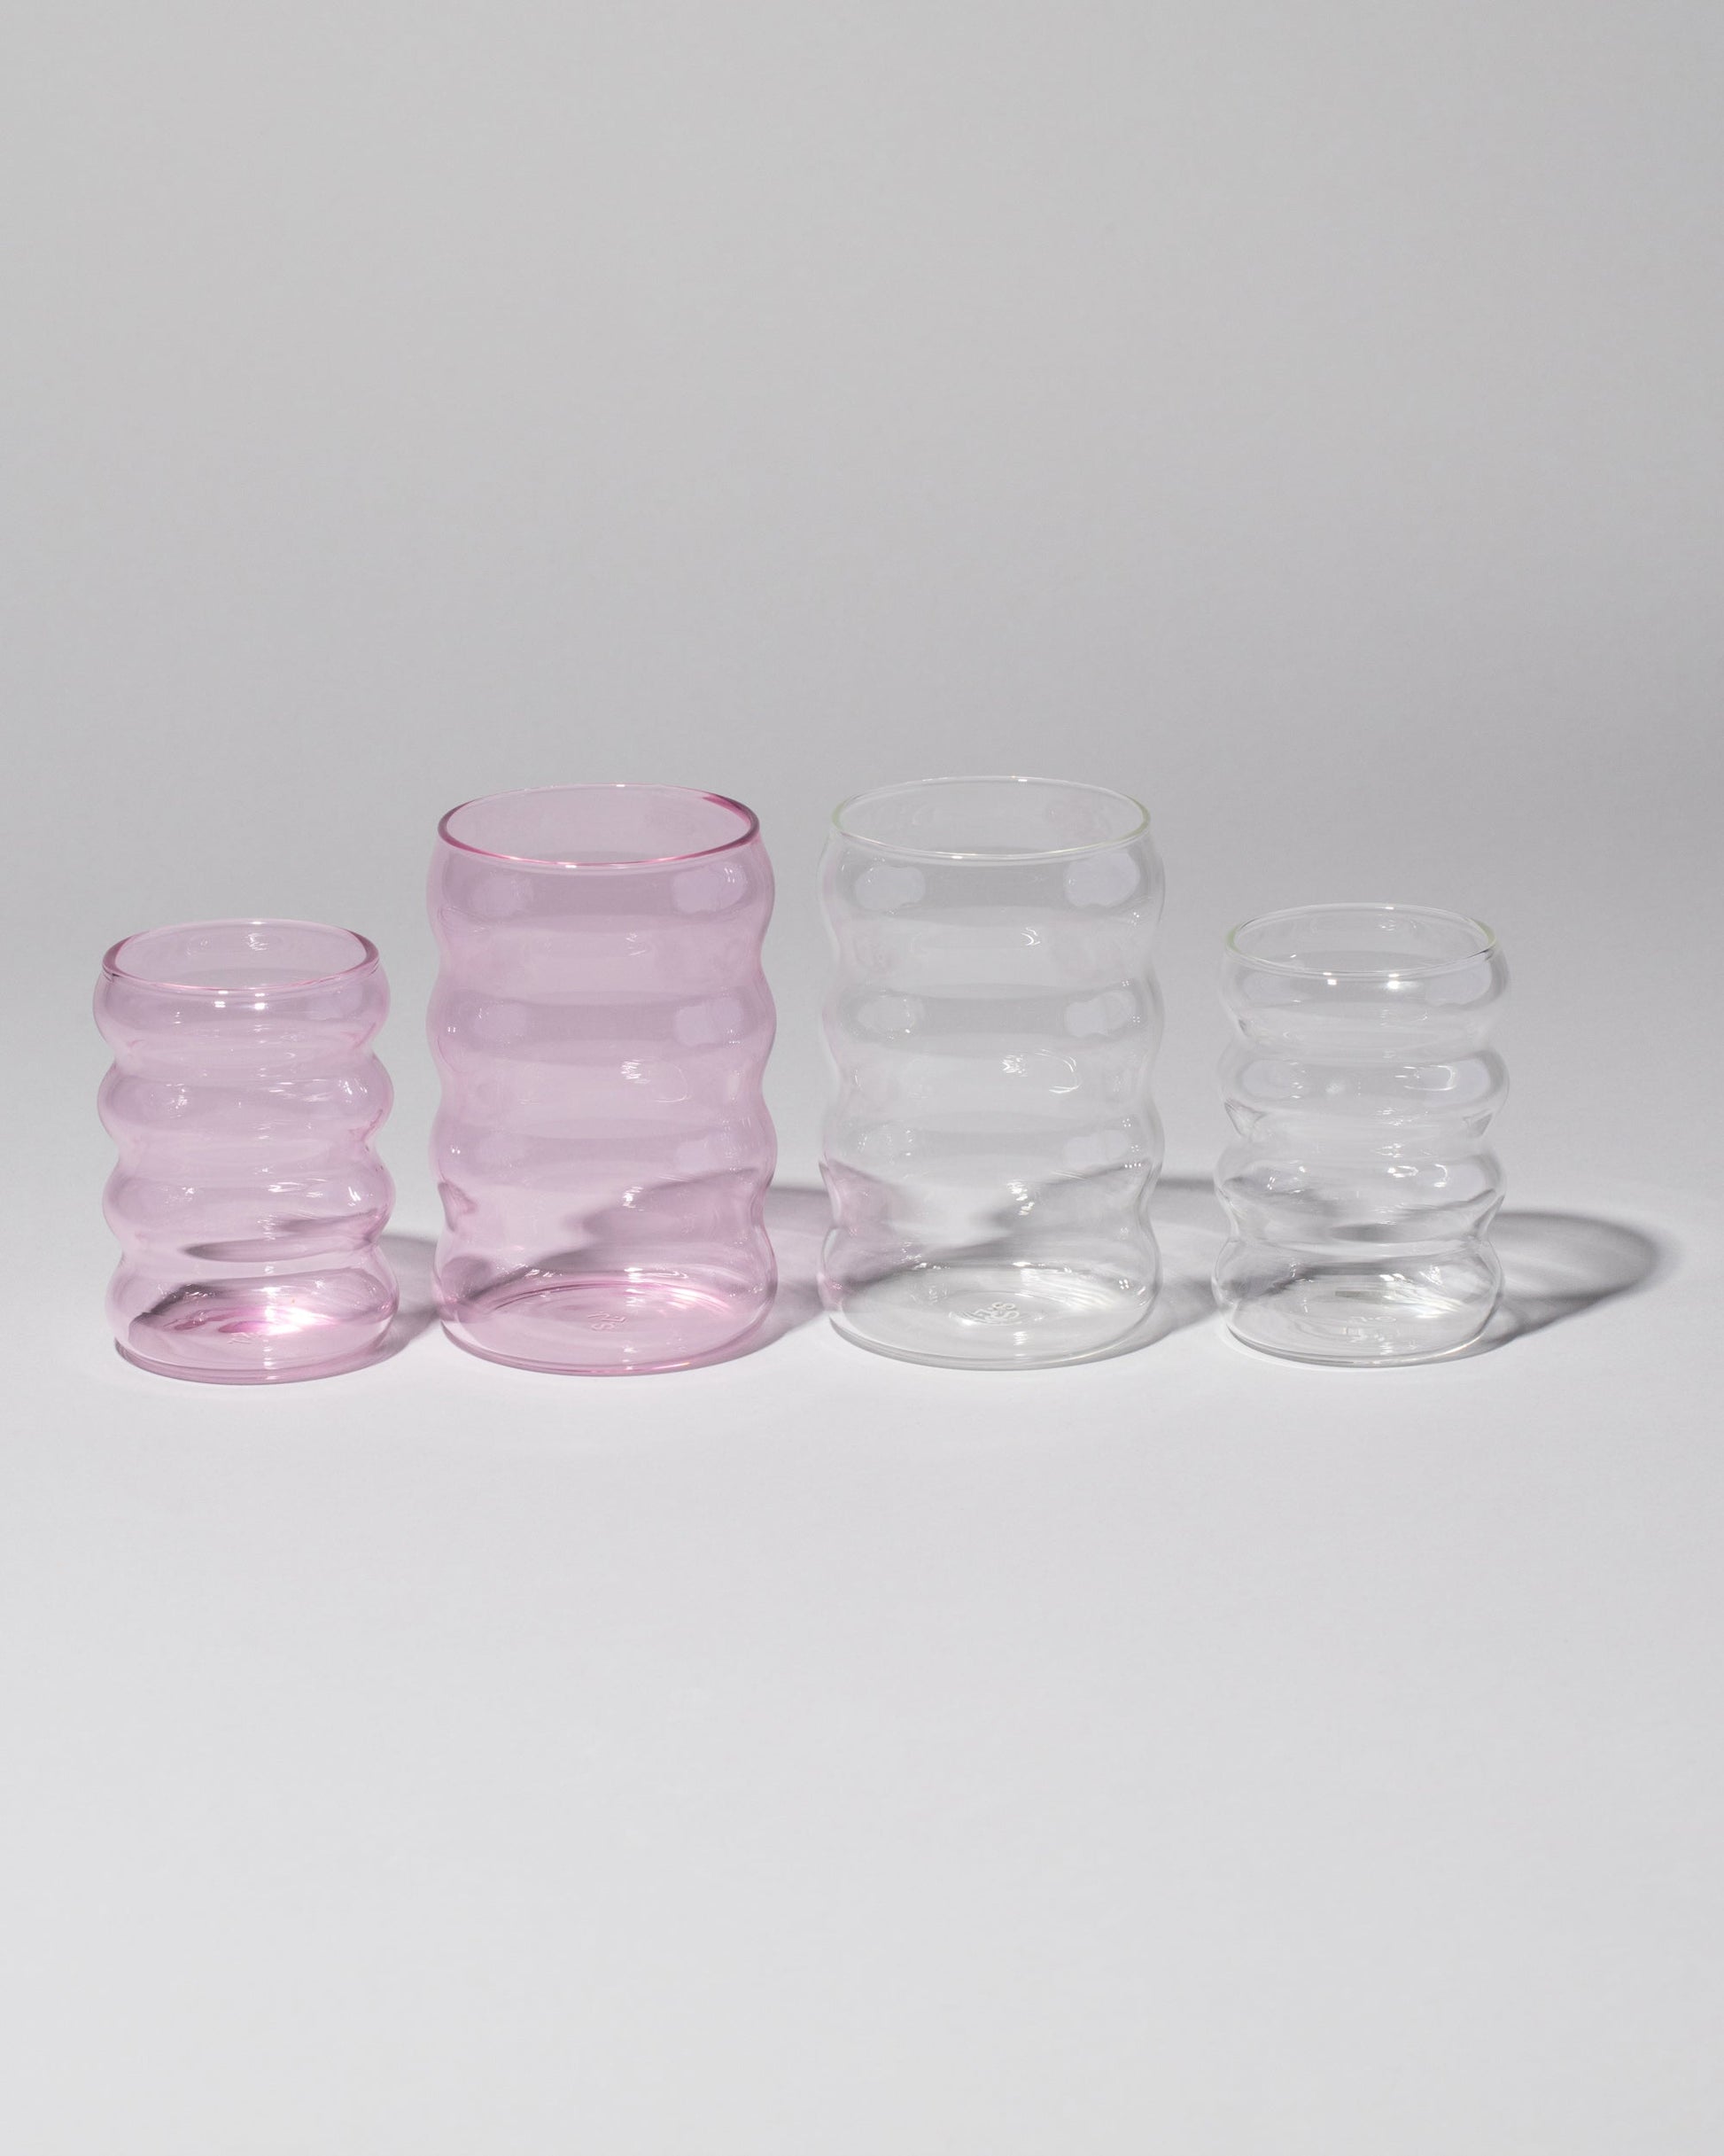  Sophie Lou Jacobsen Ripple Cups on light color background.